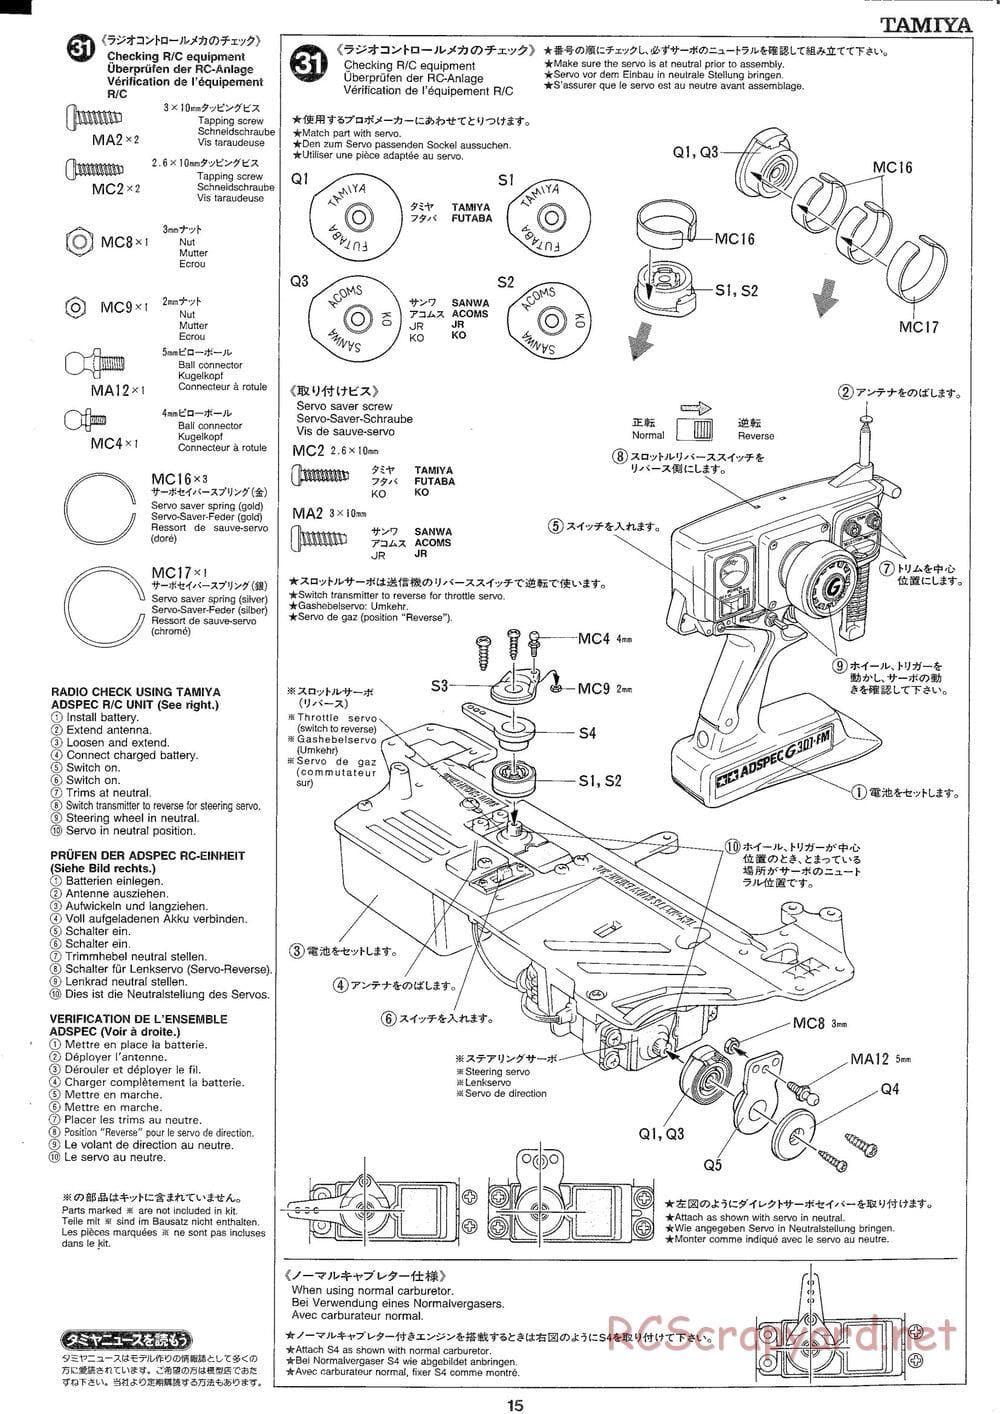 Tamiya - TGX Mk.1 TRF Special Chassis - Manual - Page 15